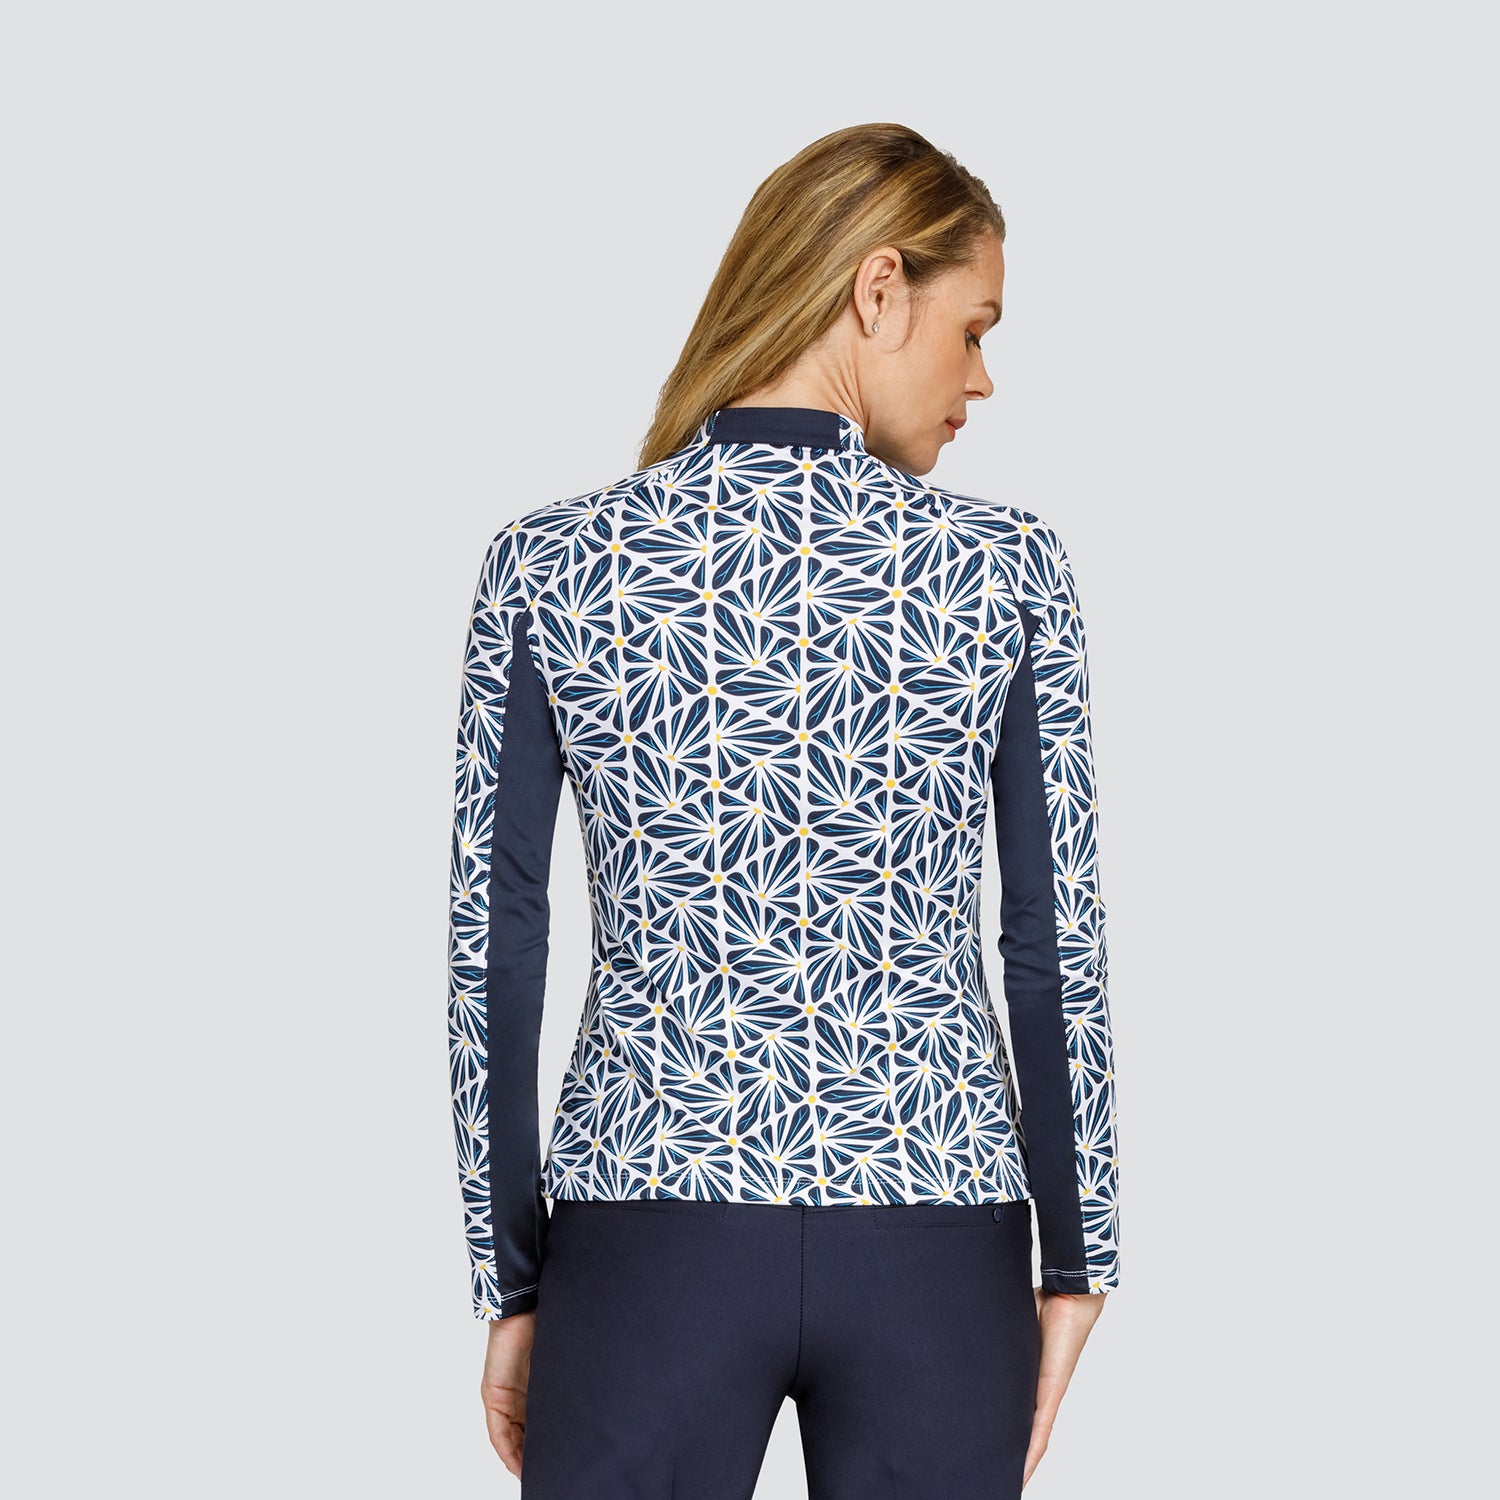 Tail Ladies Jersey Long Sleeve Top in Geometric Print